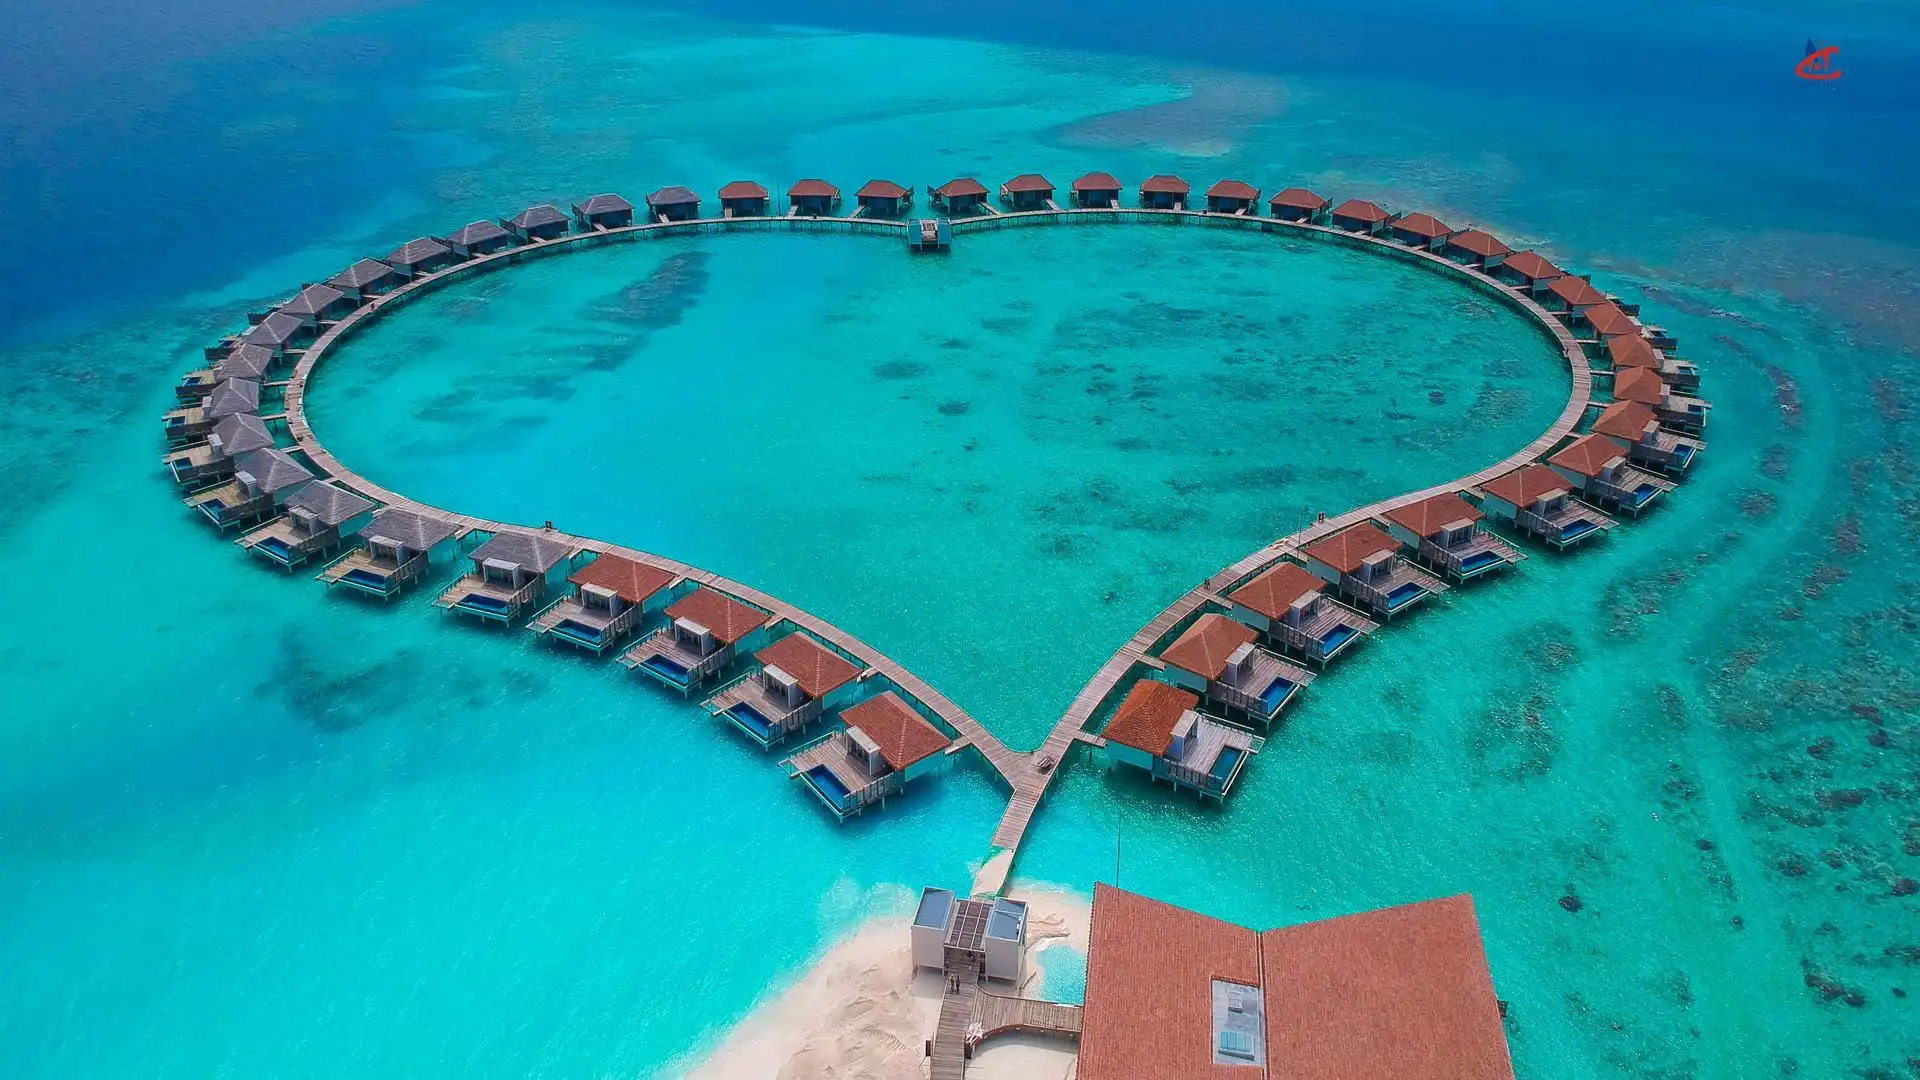 Radisson Blu Maldives resort pool